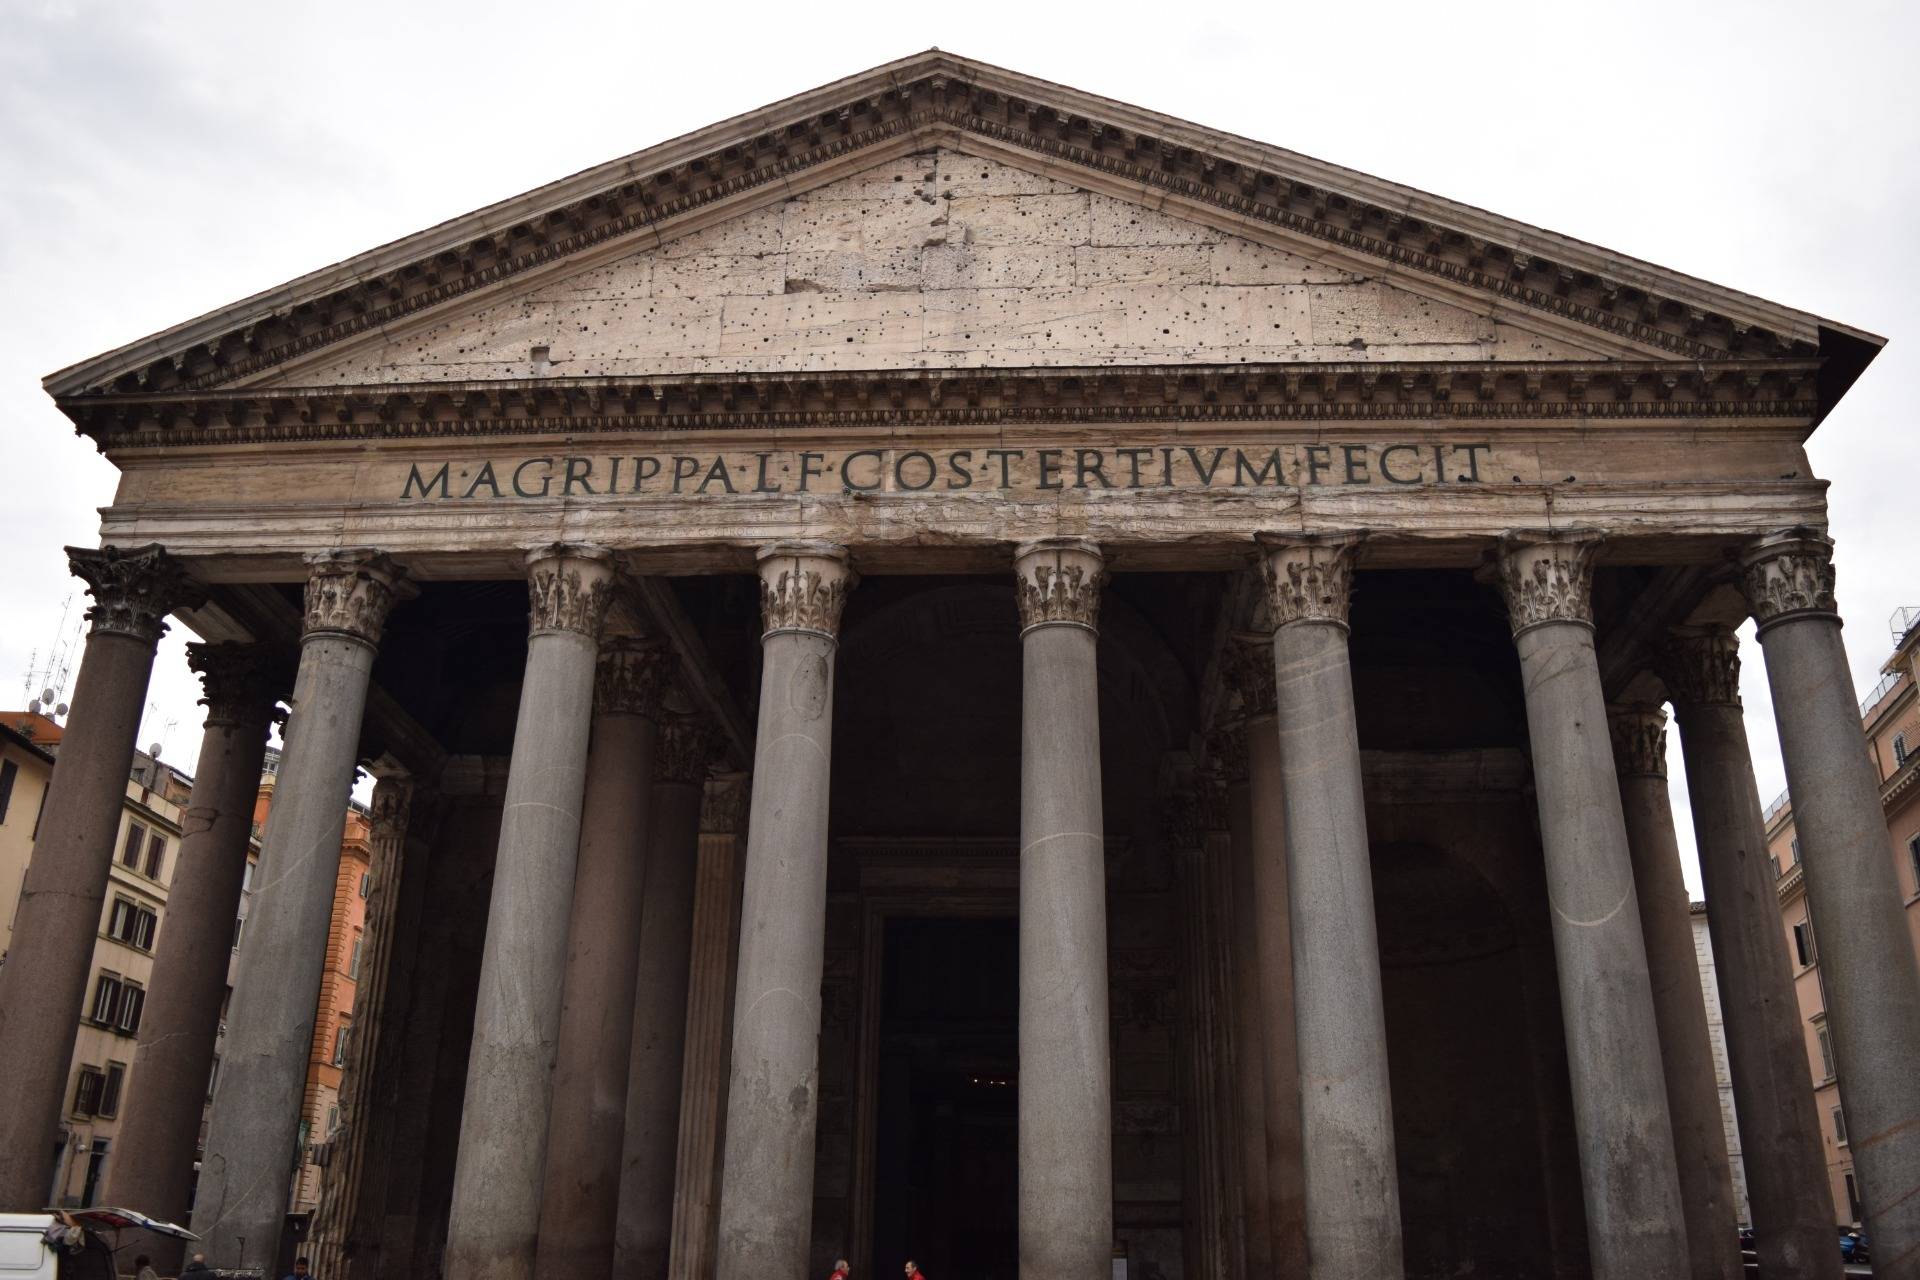 The impressive Pantheon